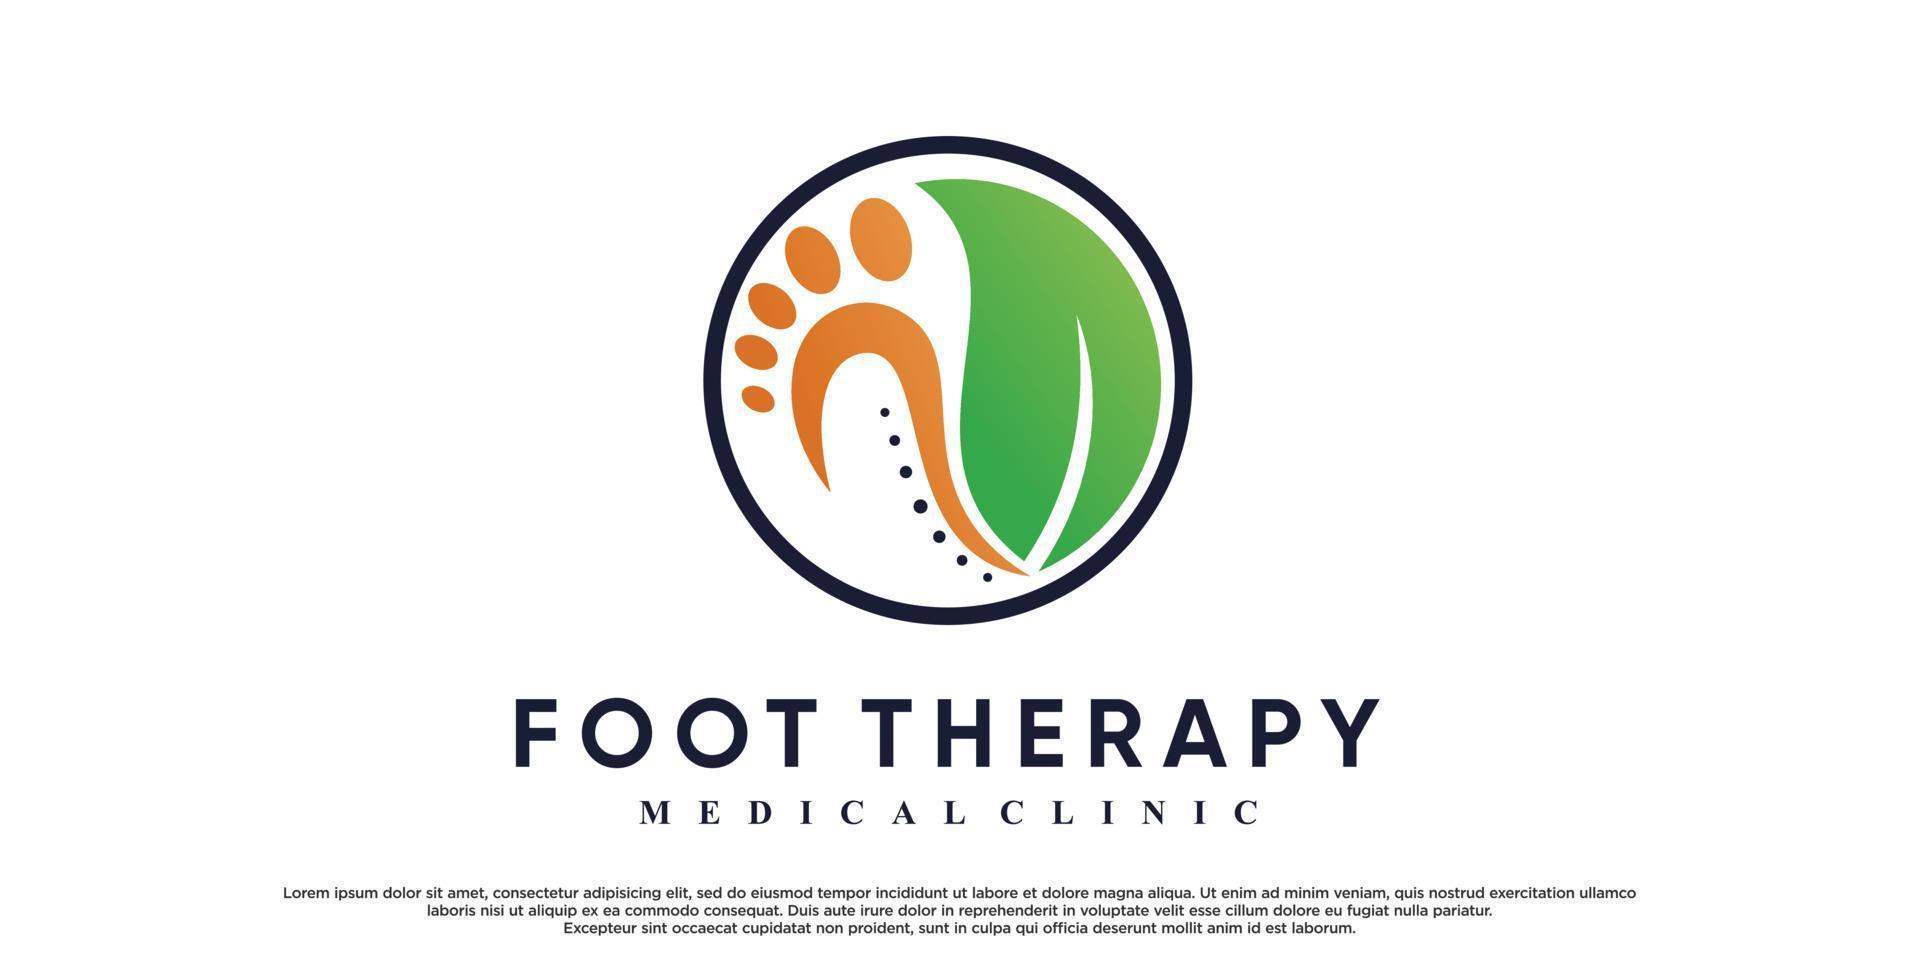 design de logotipo de terapia do pé com elemento de folha e vetor premium de conceito exclusivo